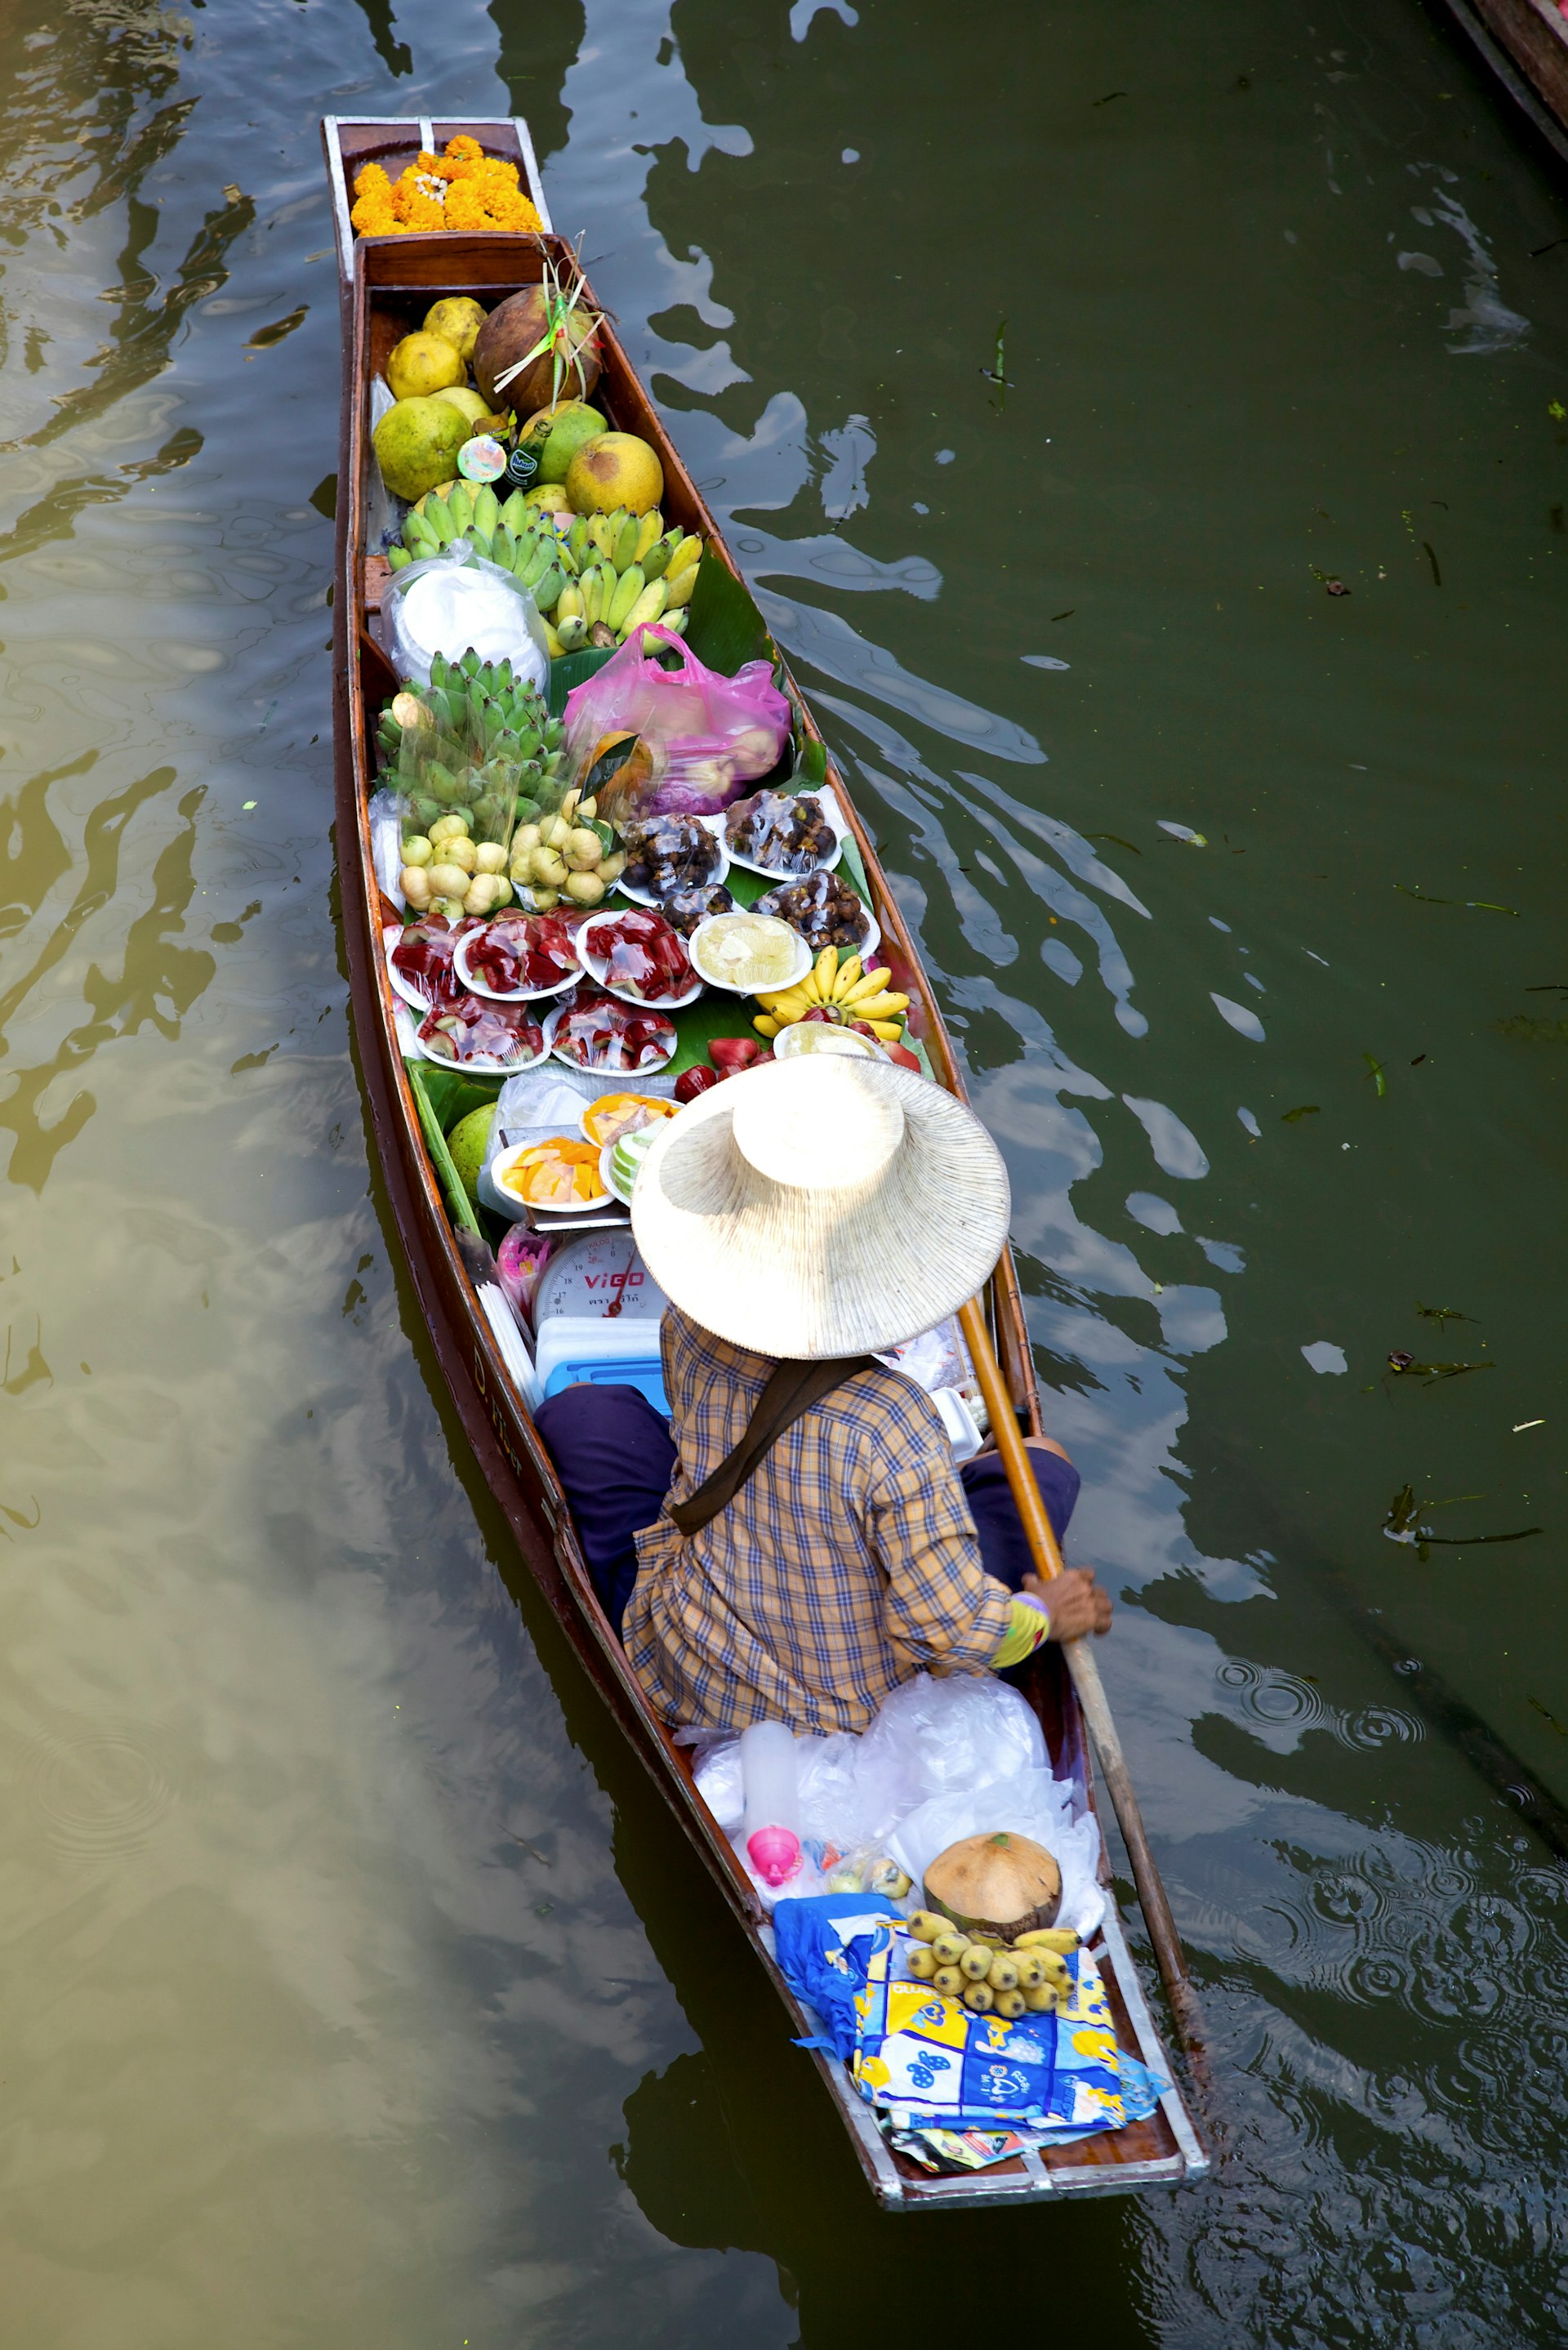 The Damnoen Saduk floating market near Bangkok, Thailand